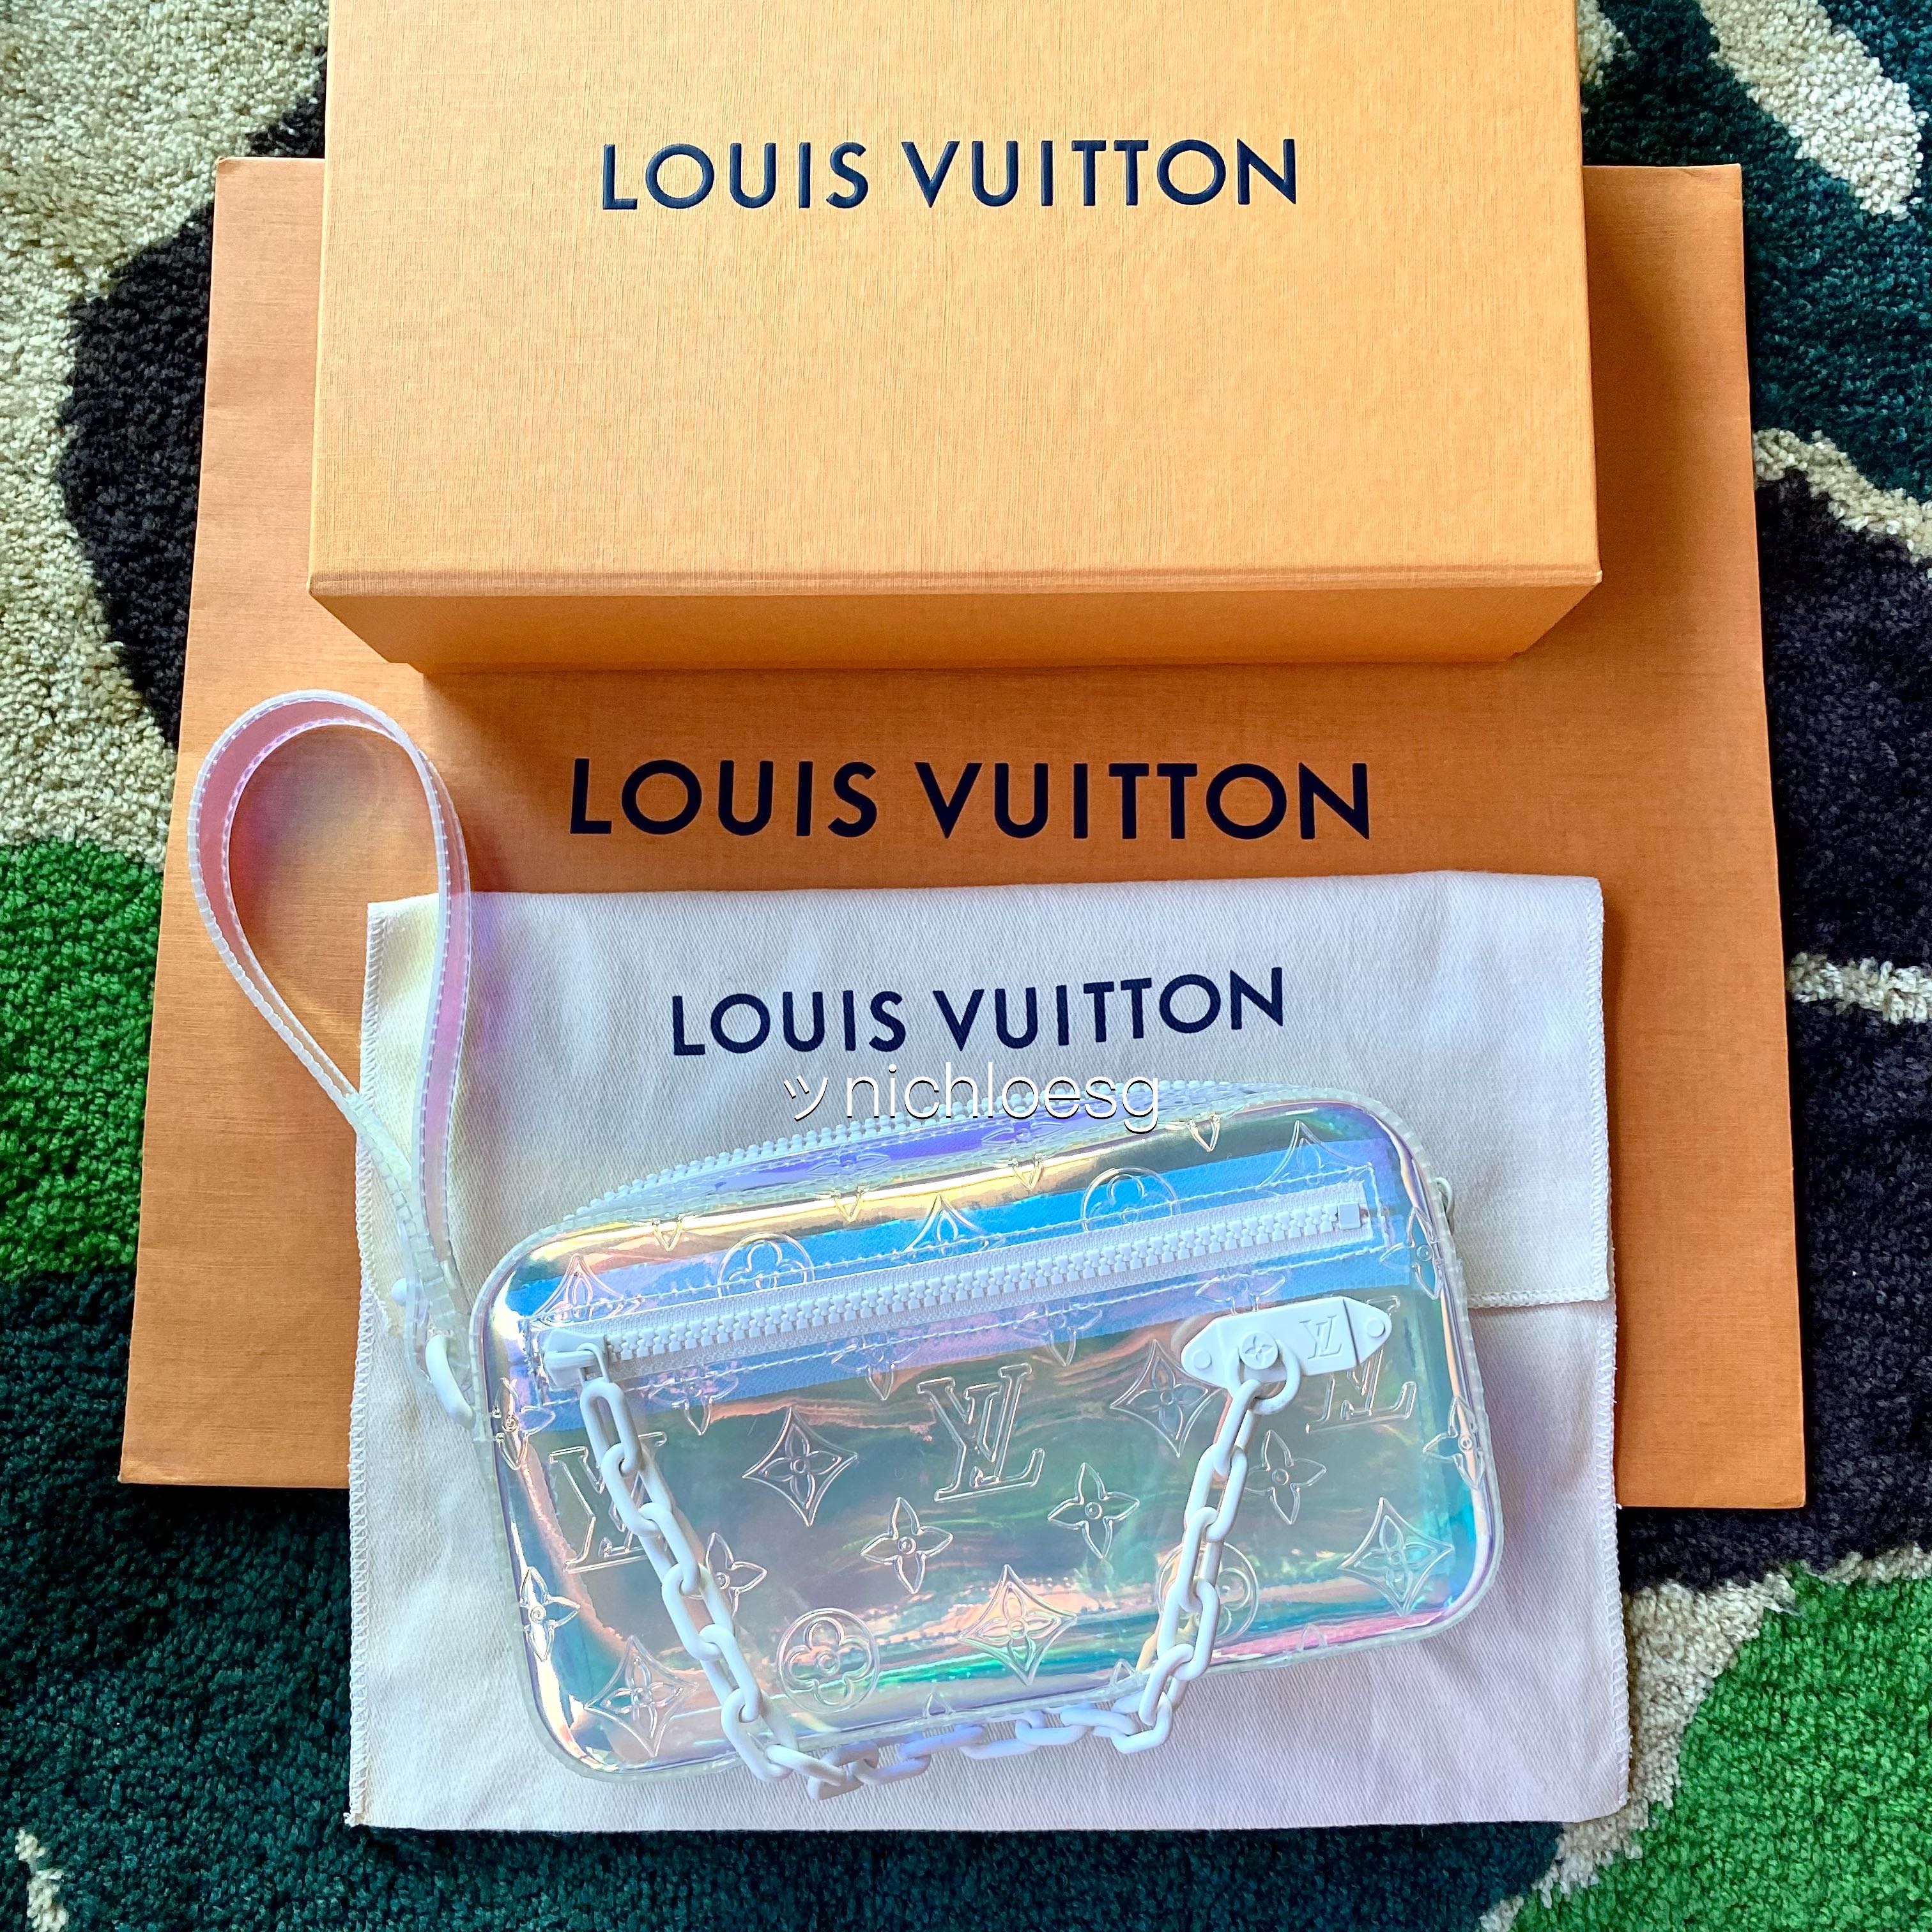 Louis Vuitton x Virgil Abloh Volga Monogram Pochette with chain